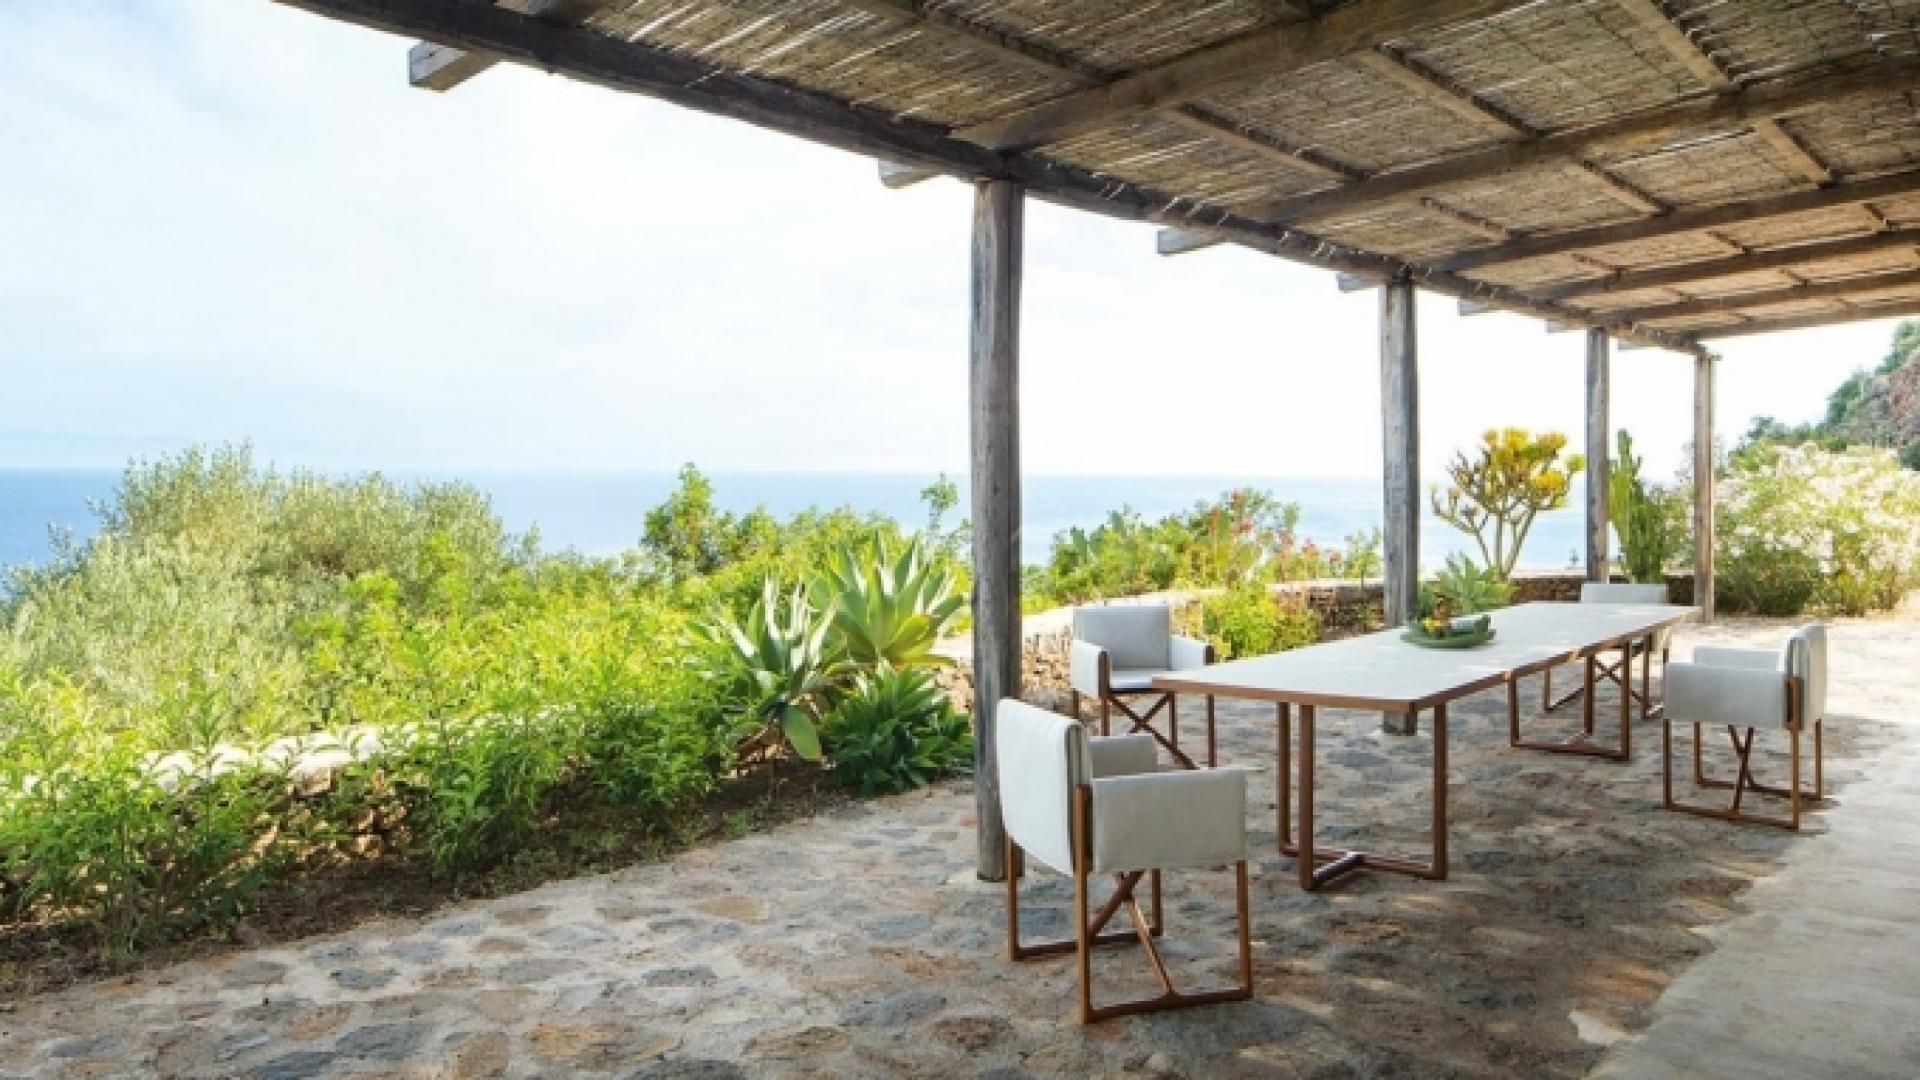 Portofino lounge stoel